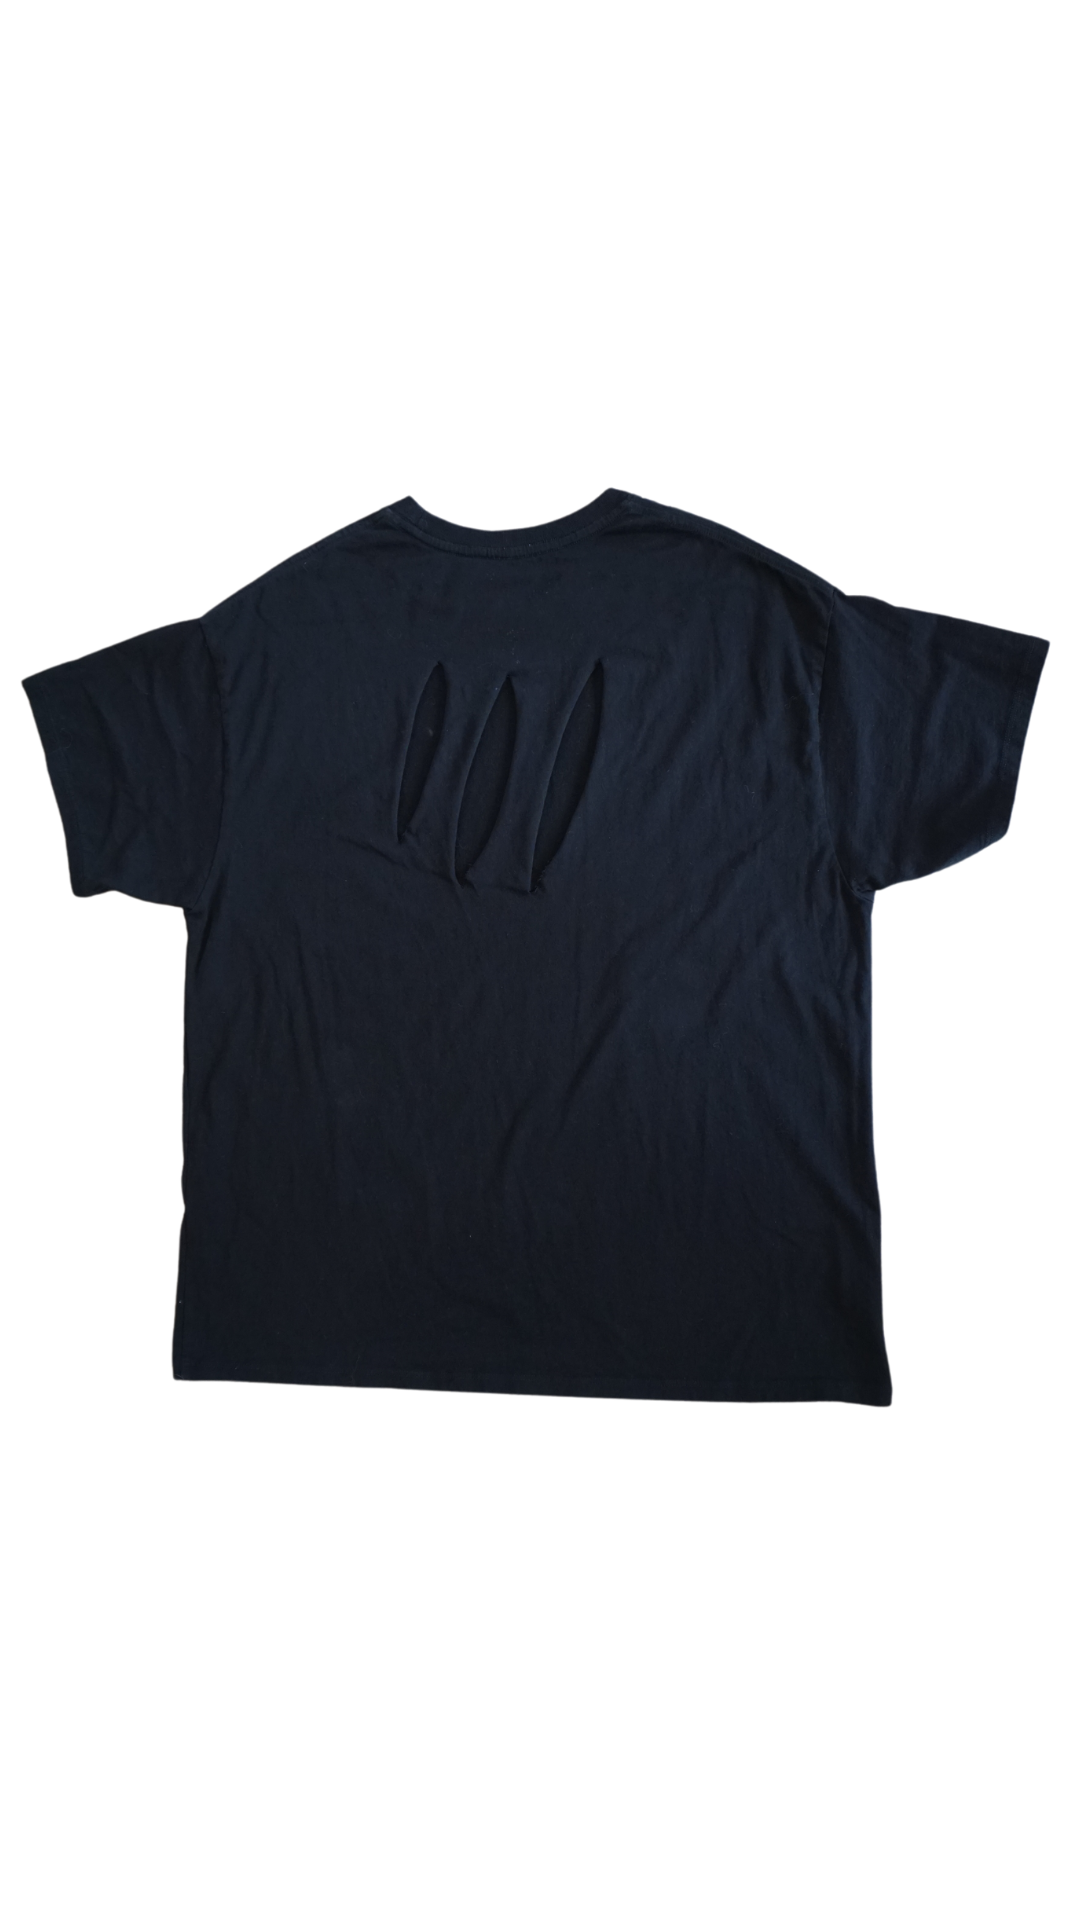 The Fontana T-Shirt